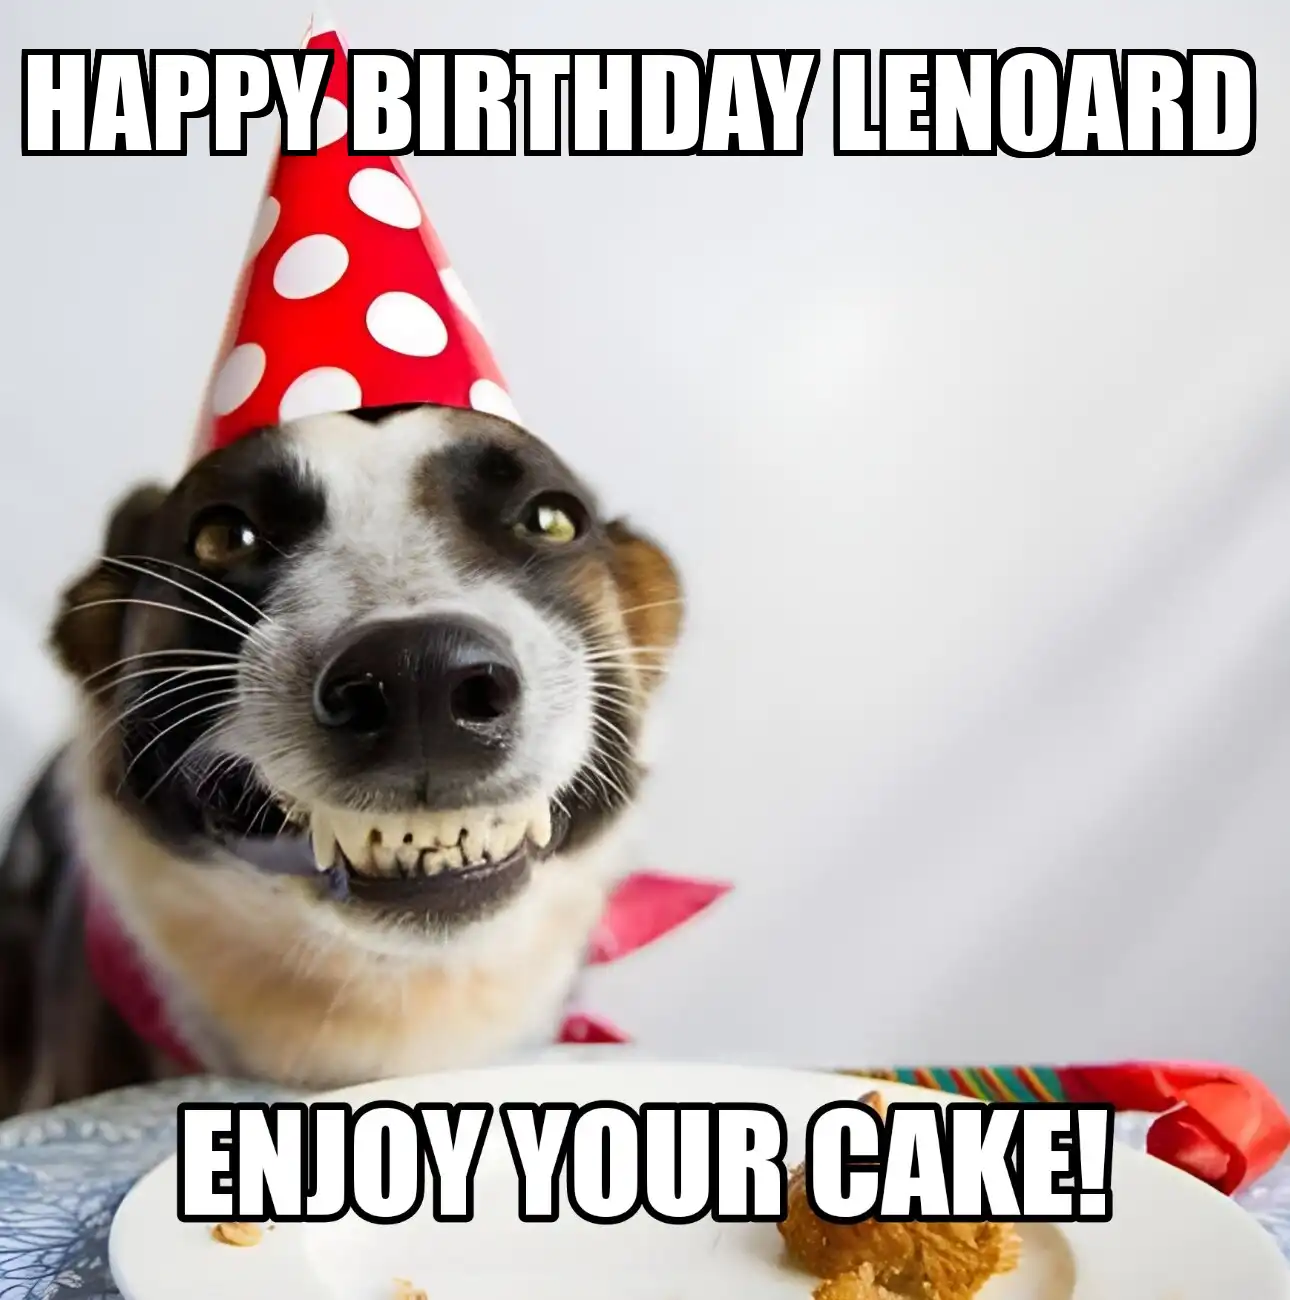 Happy Birthday Lenoard Enjoy Your Cake Dog Meme